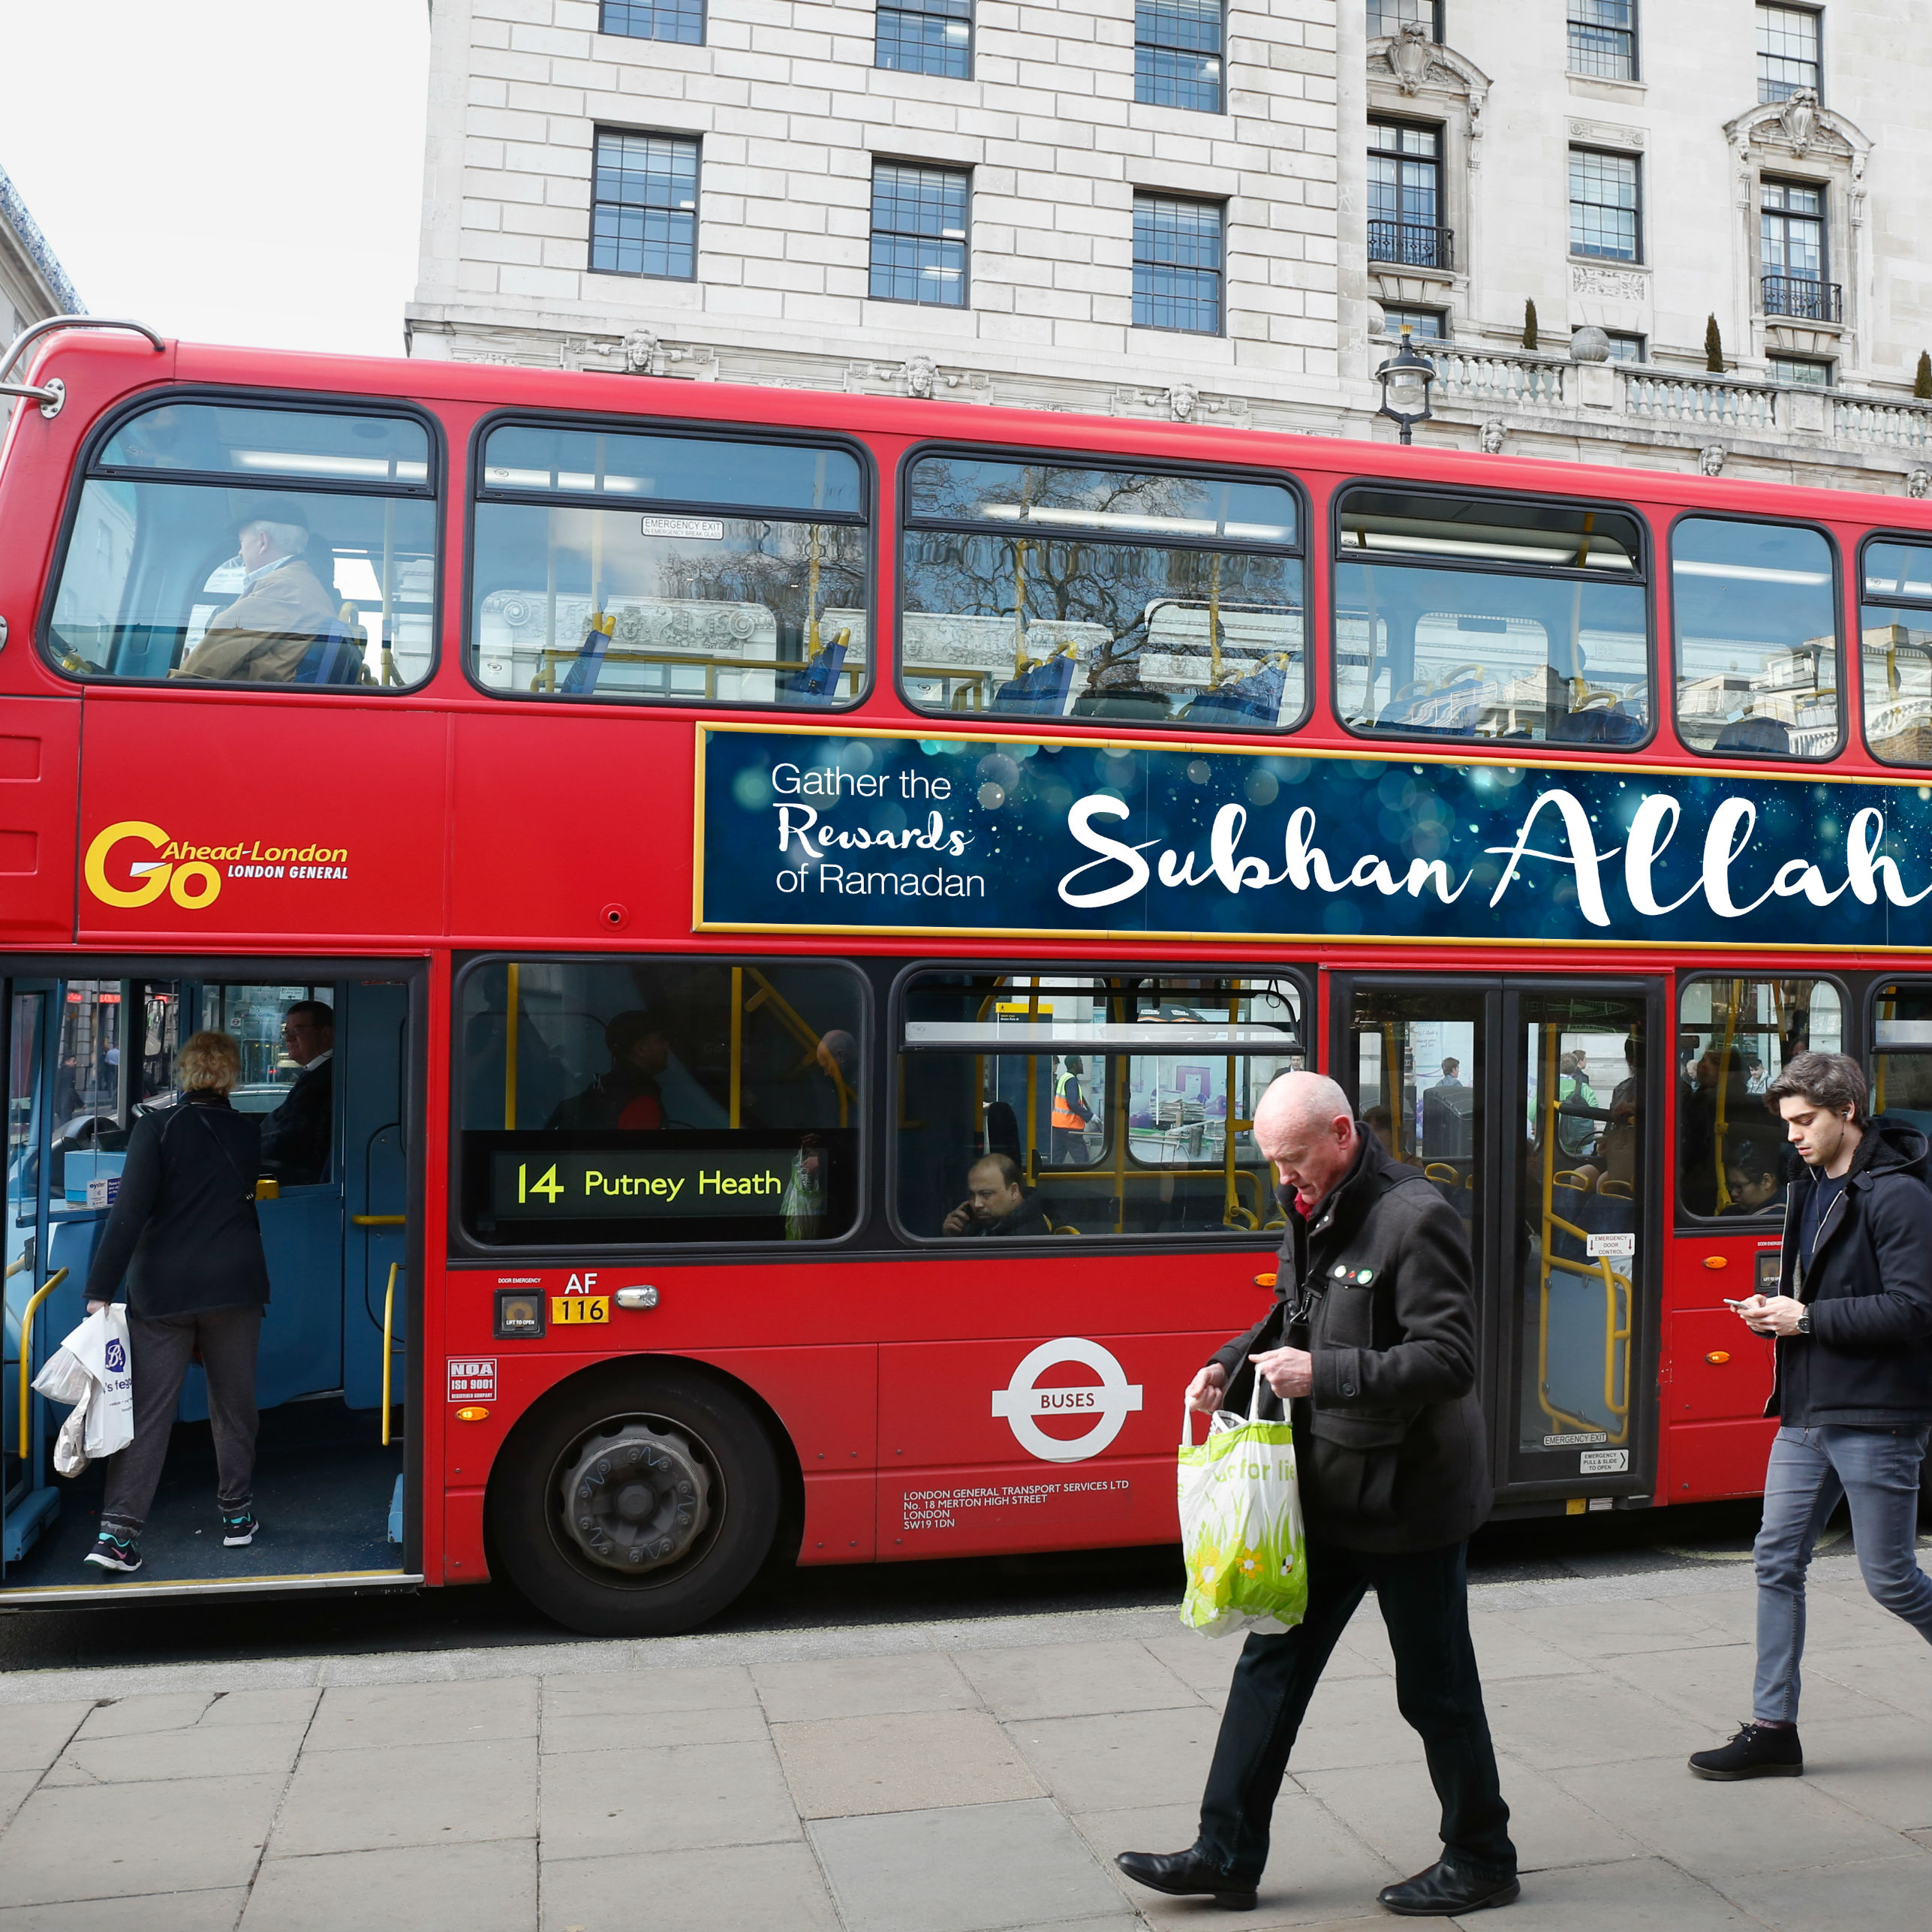 Buses to carry slogan 'Subhan Allah' ahead of Ramadan